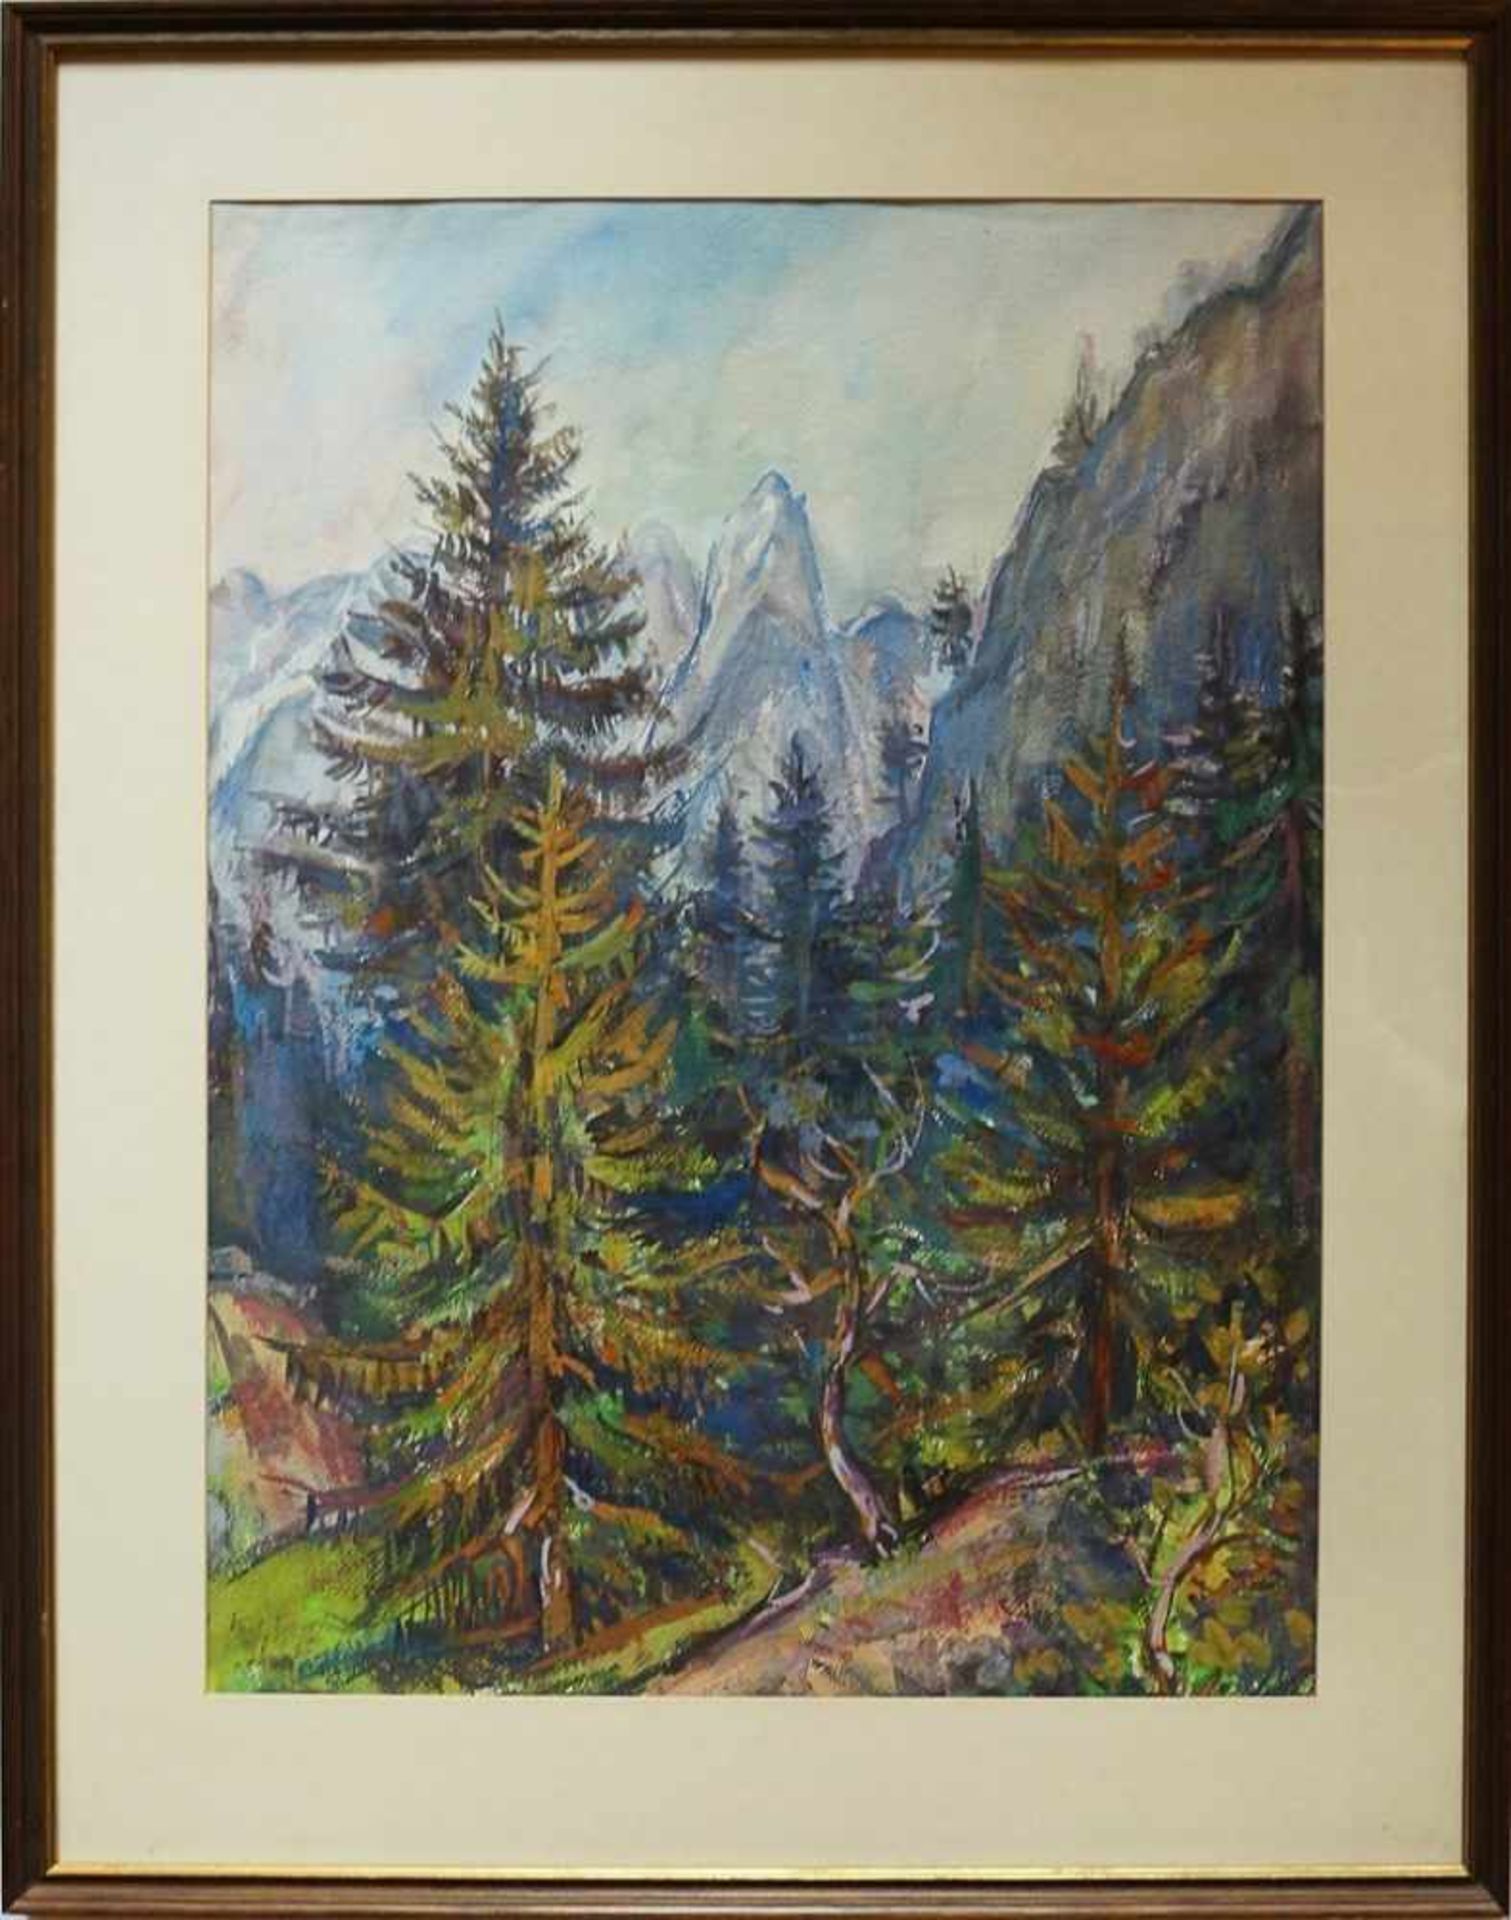 Dörrfuß, Karl 1906 Fürth-1984 ebd., dt. Maler u. Plastiker, "Im Gebirge", Aquarell, intensive